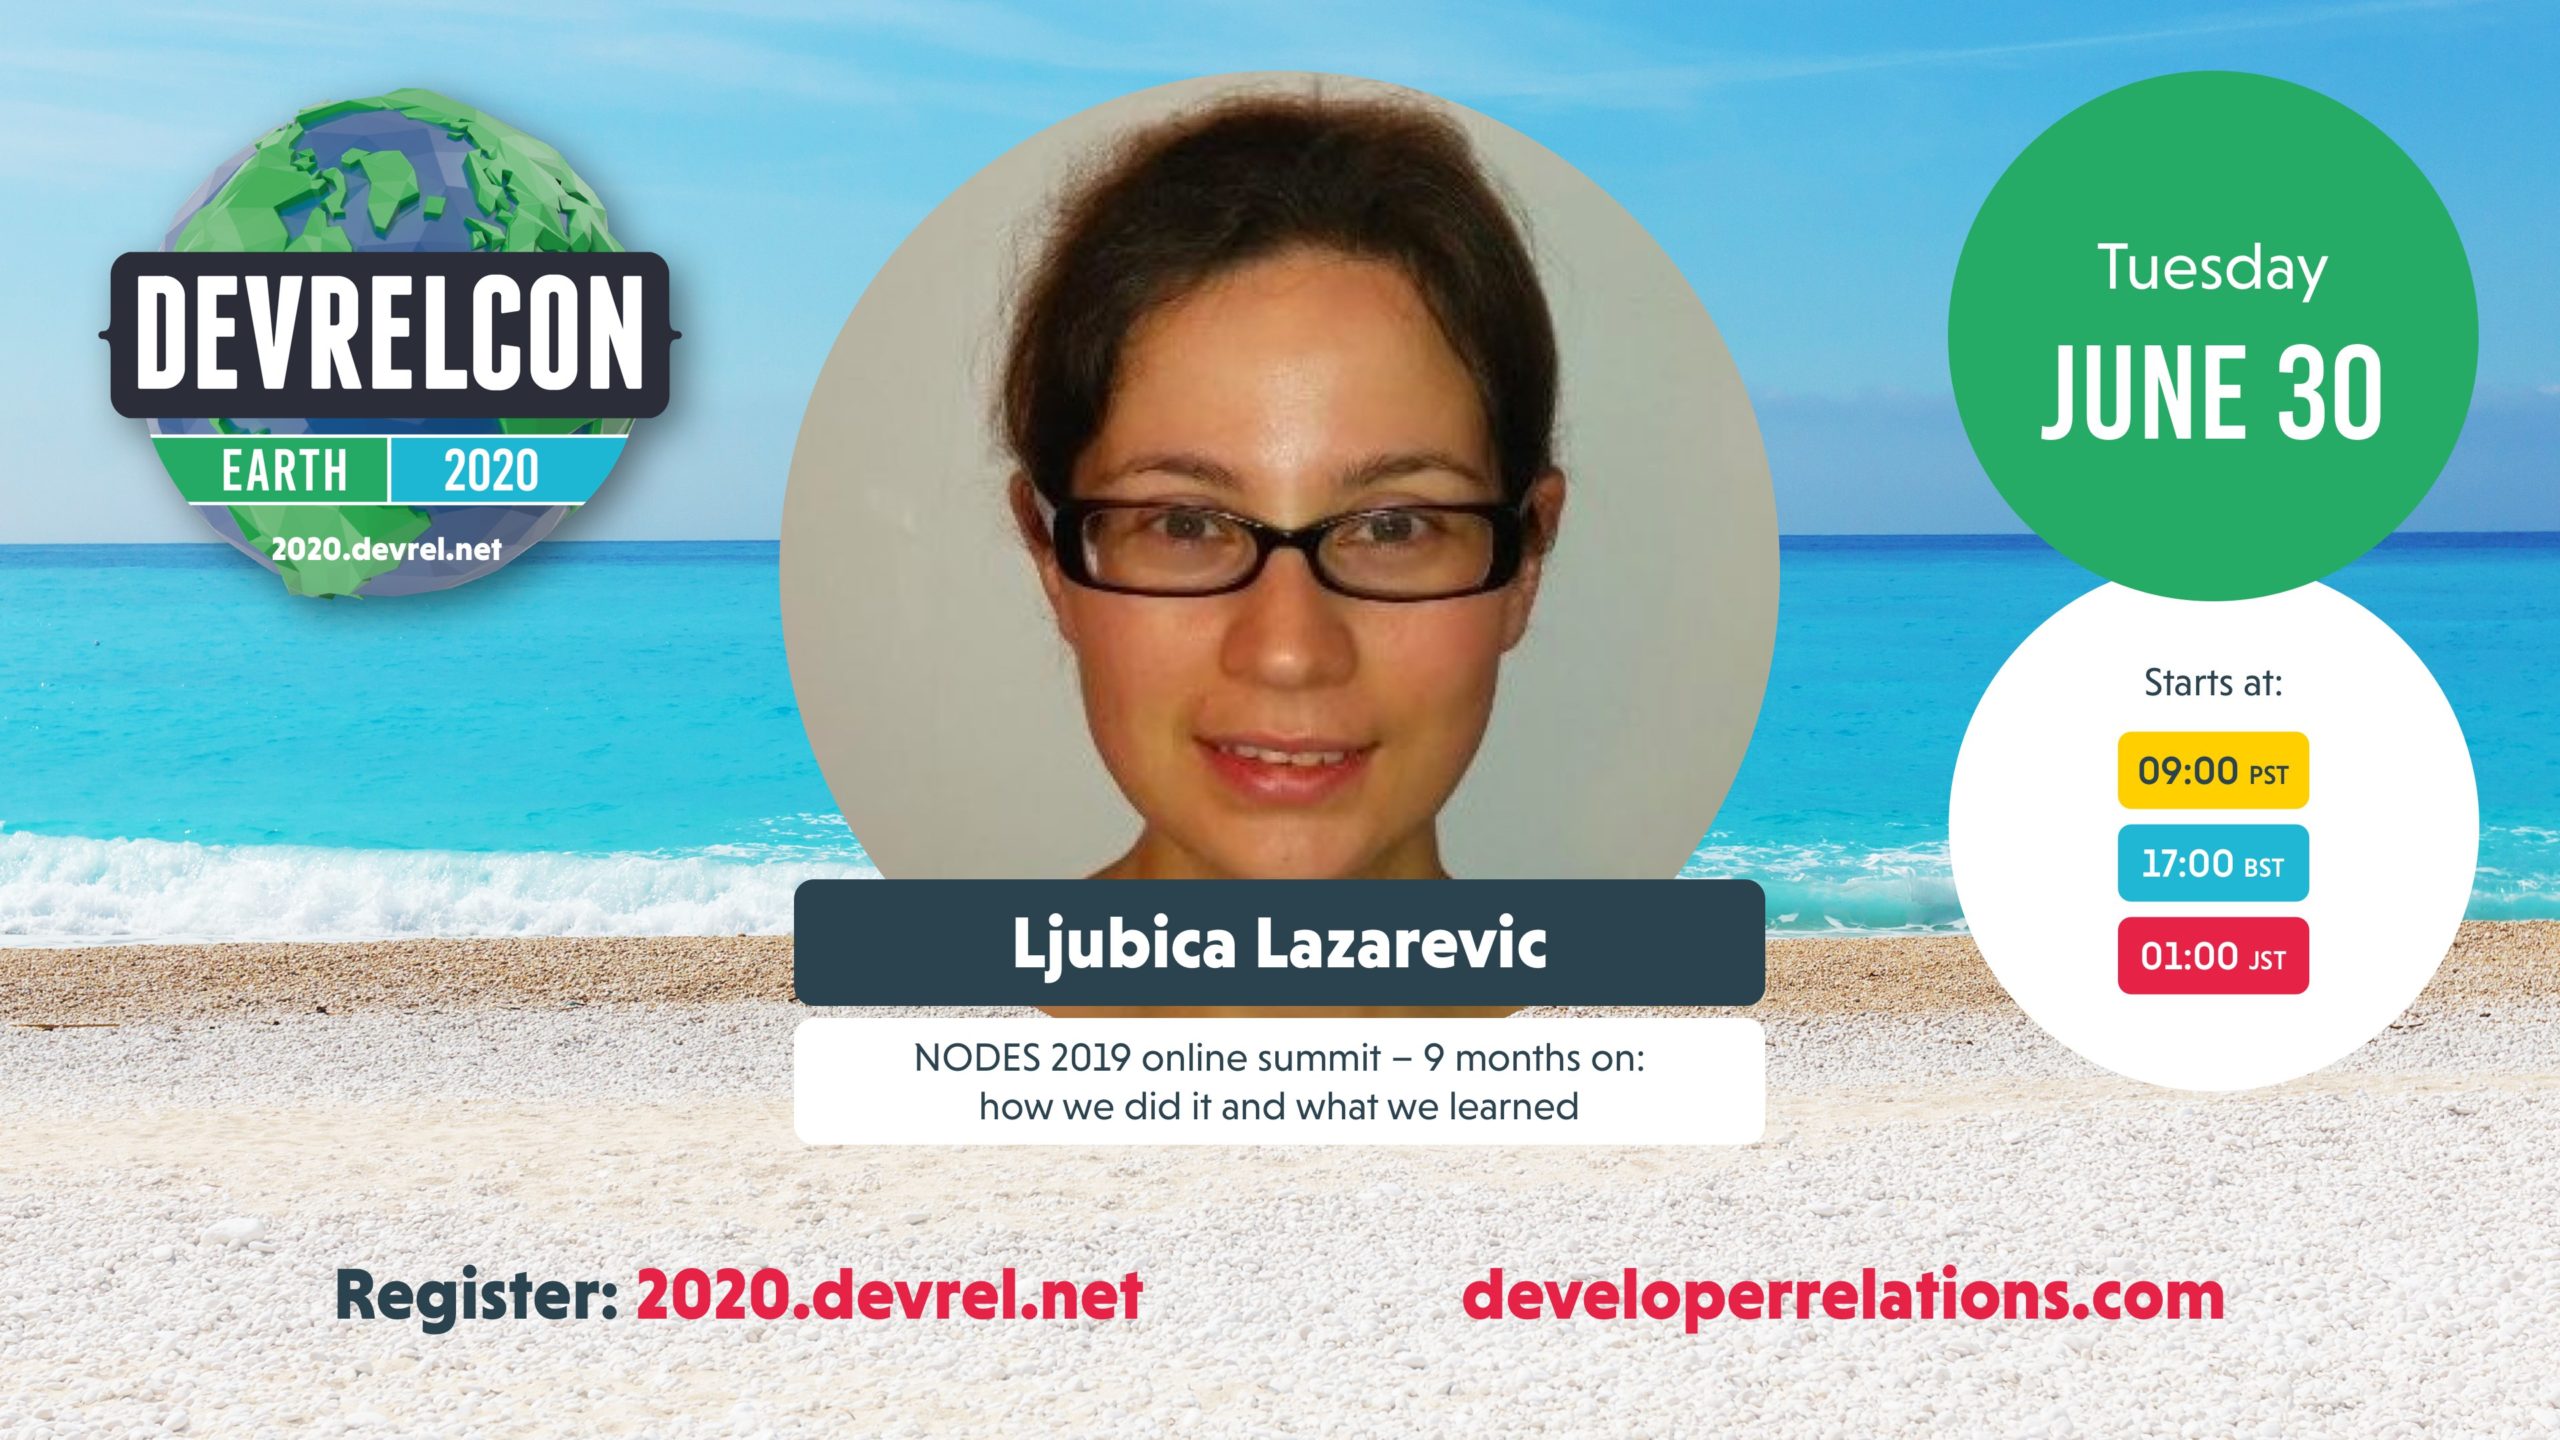 Ljubica Lazarevic speaking at DevRelCon Earth 2020